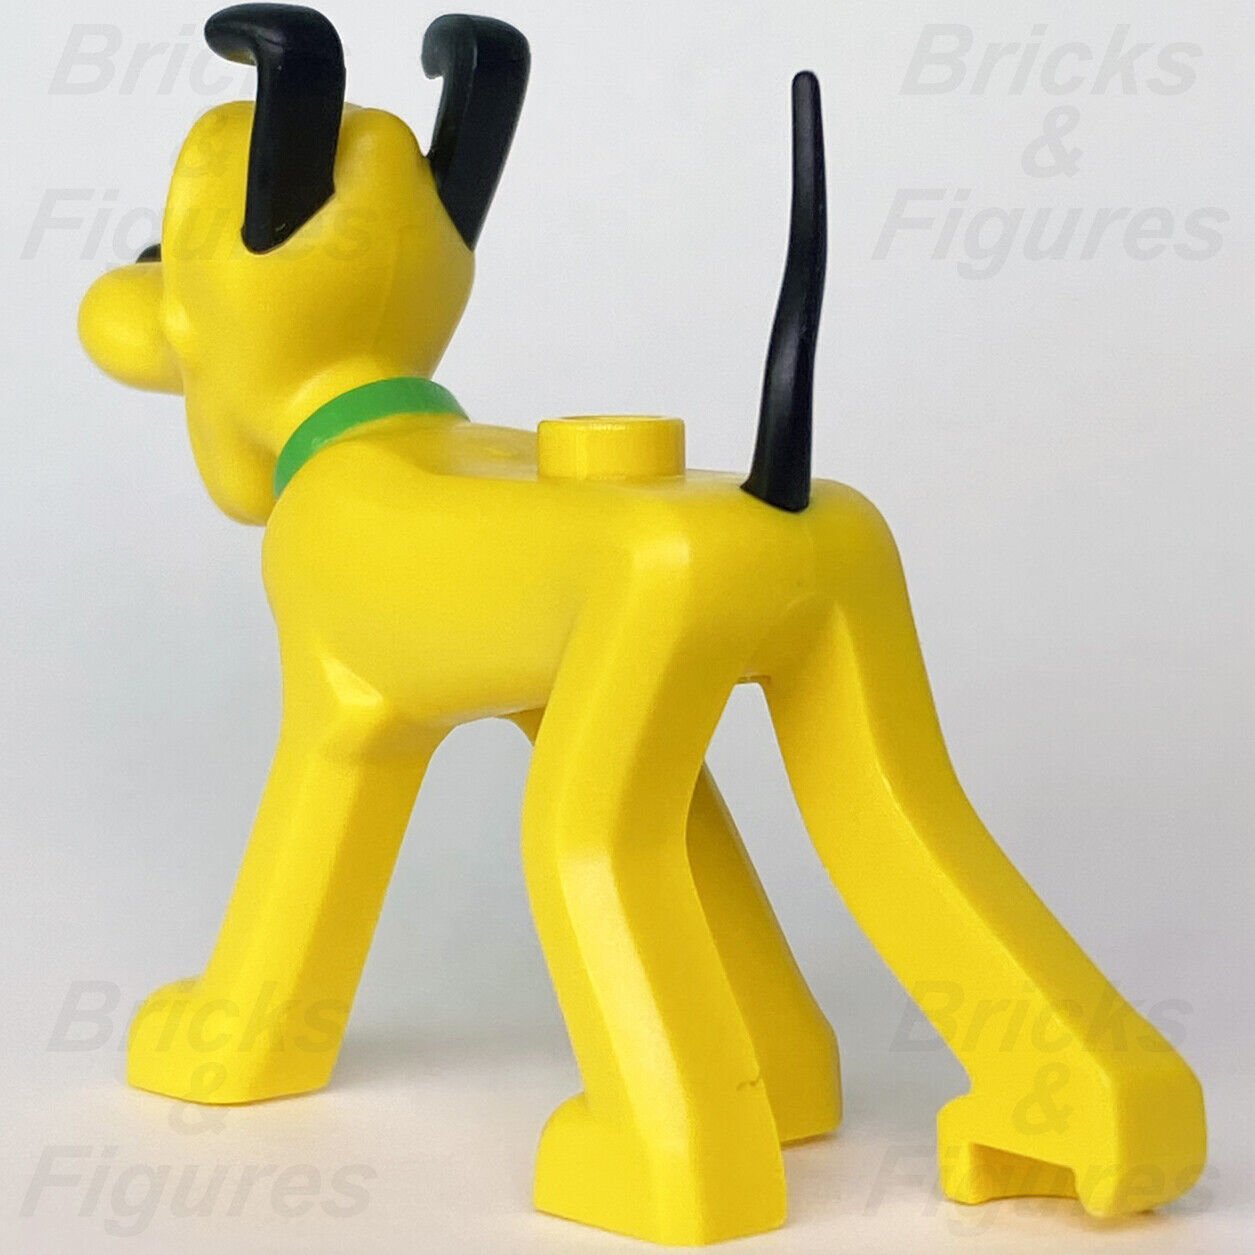 LEGO Pluto Dog Disney Mickey and Friends Animal Minifigure Part 10776 - Bricks & Figures